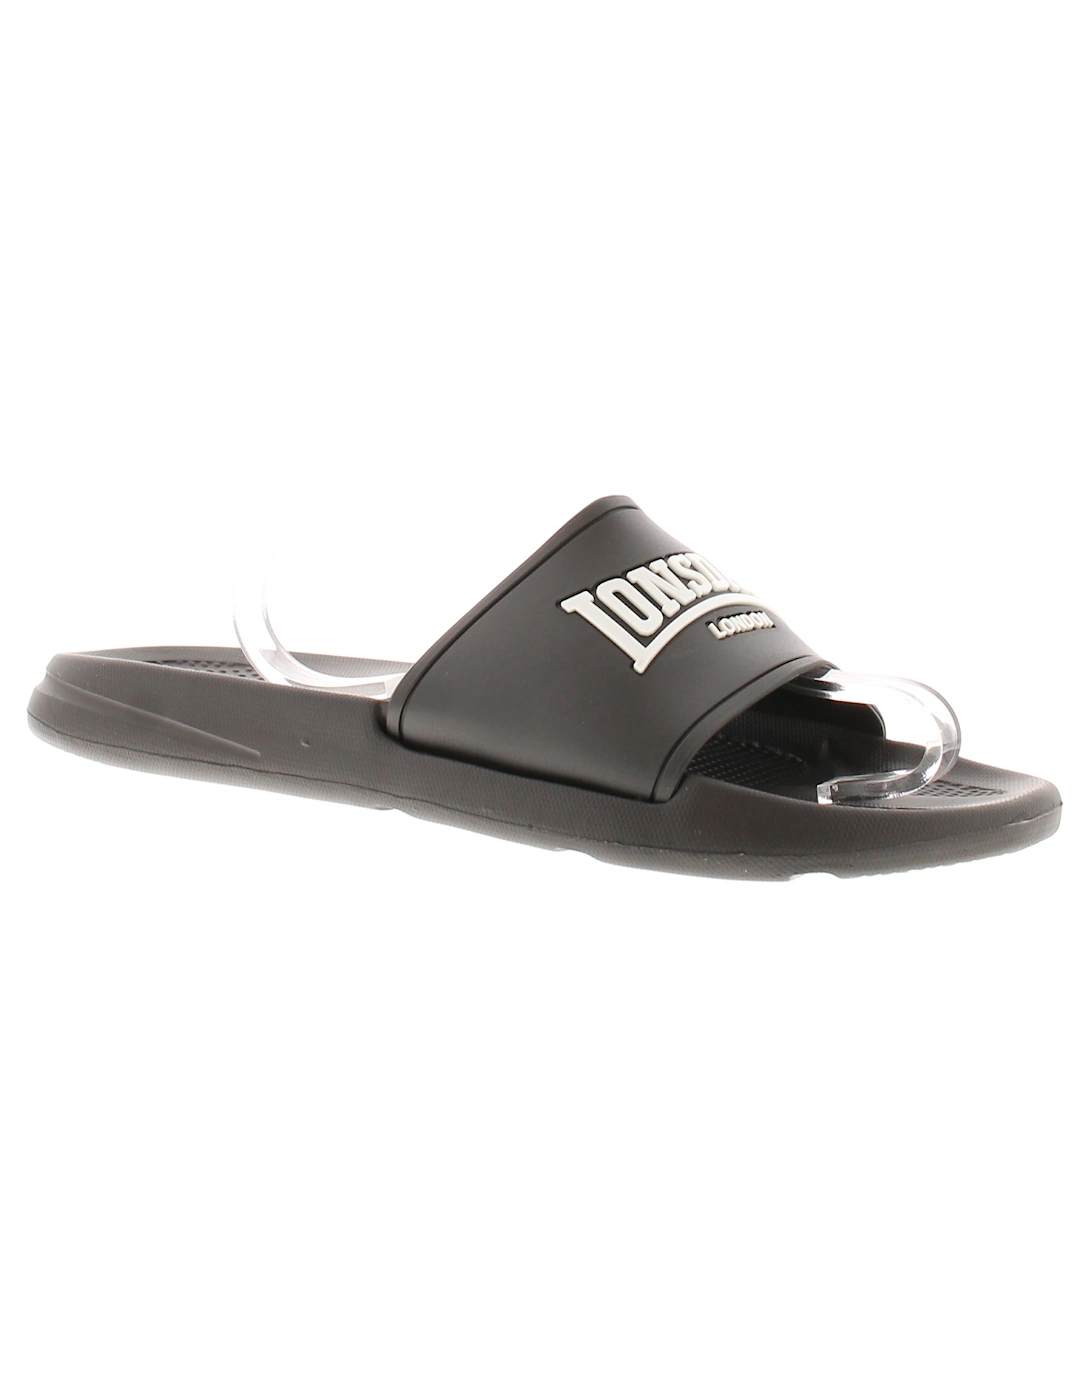 Mens Beach Sandals Naples xl Slip On black UK Size, 6 of 5